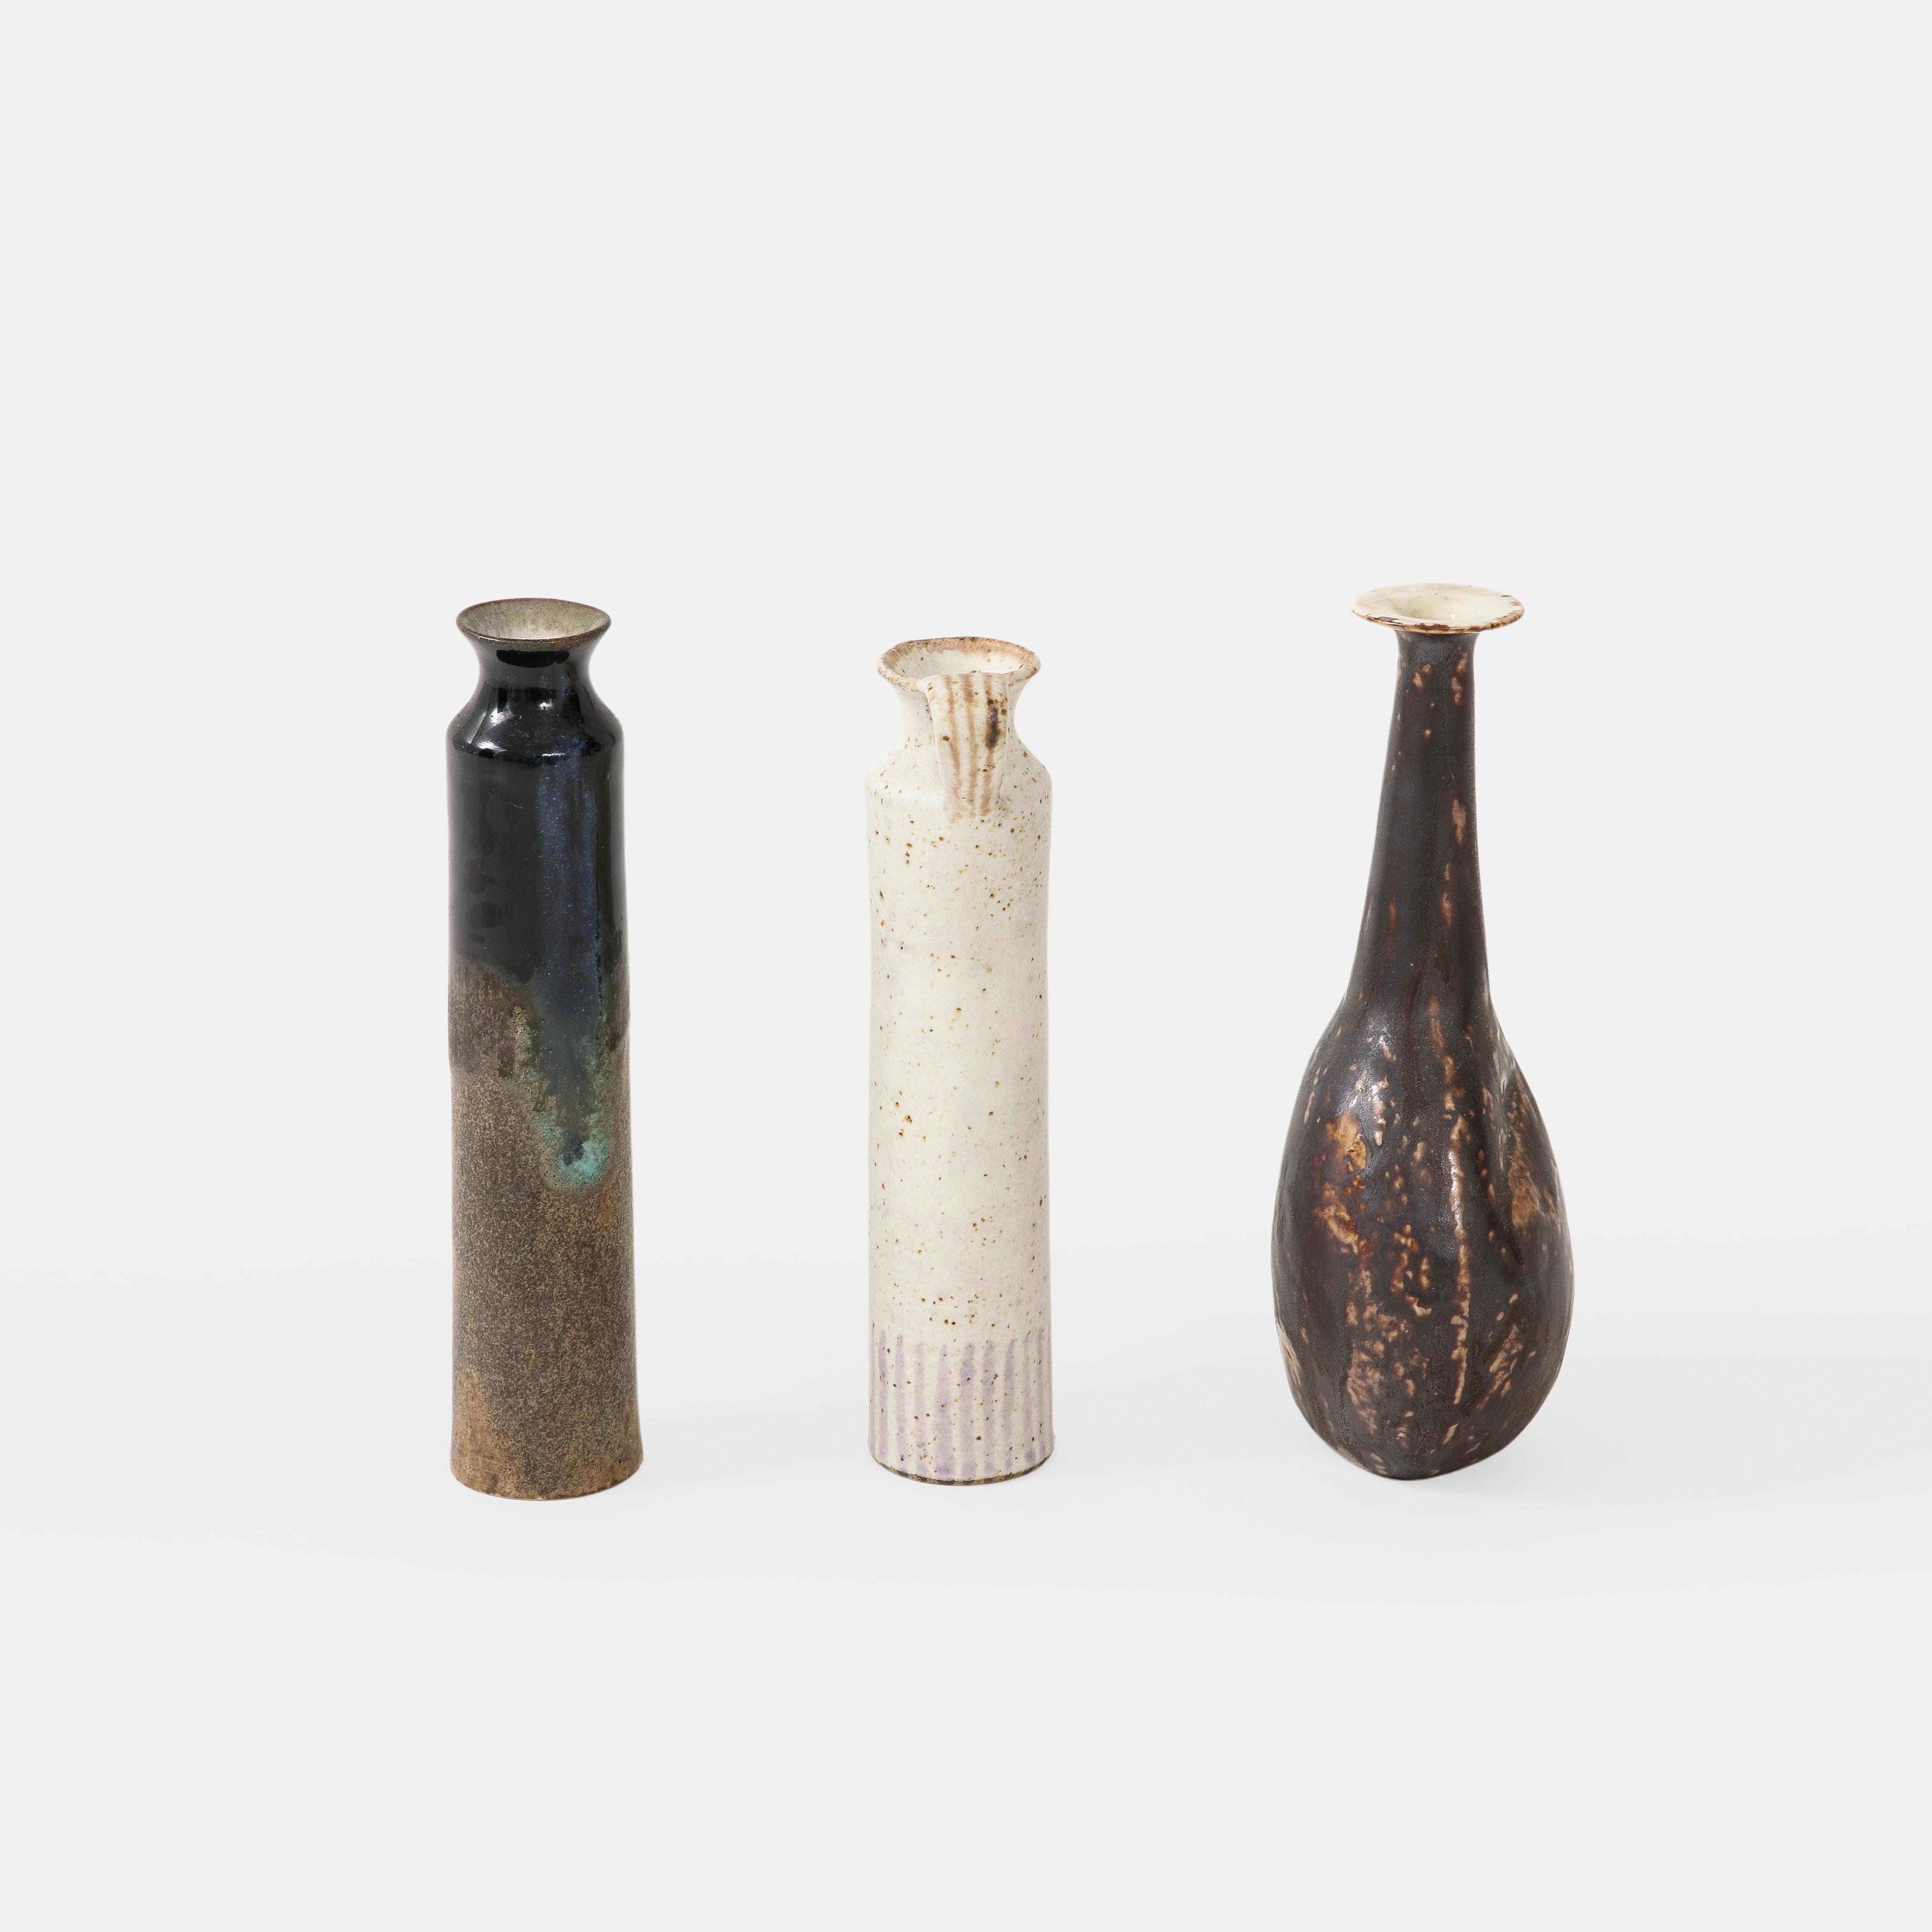 Glazed Bruno Gambone Set of Three Small Ceramic or Stoneware Vases, Italy, 1970s For Sale